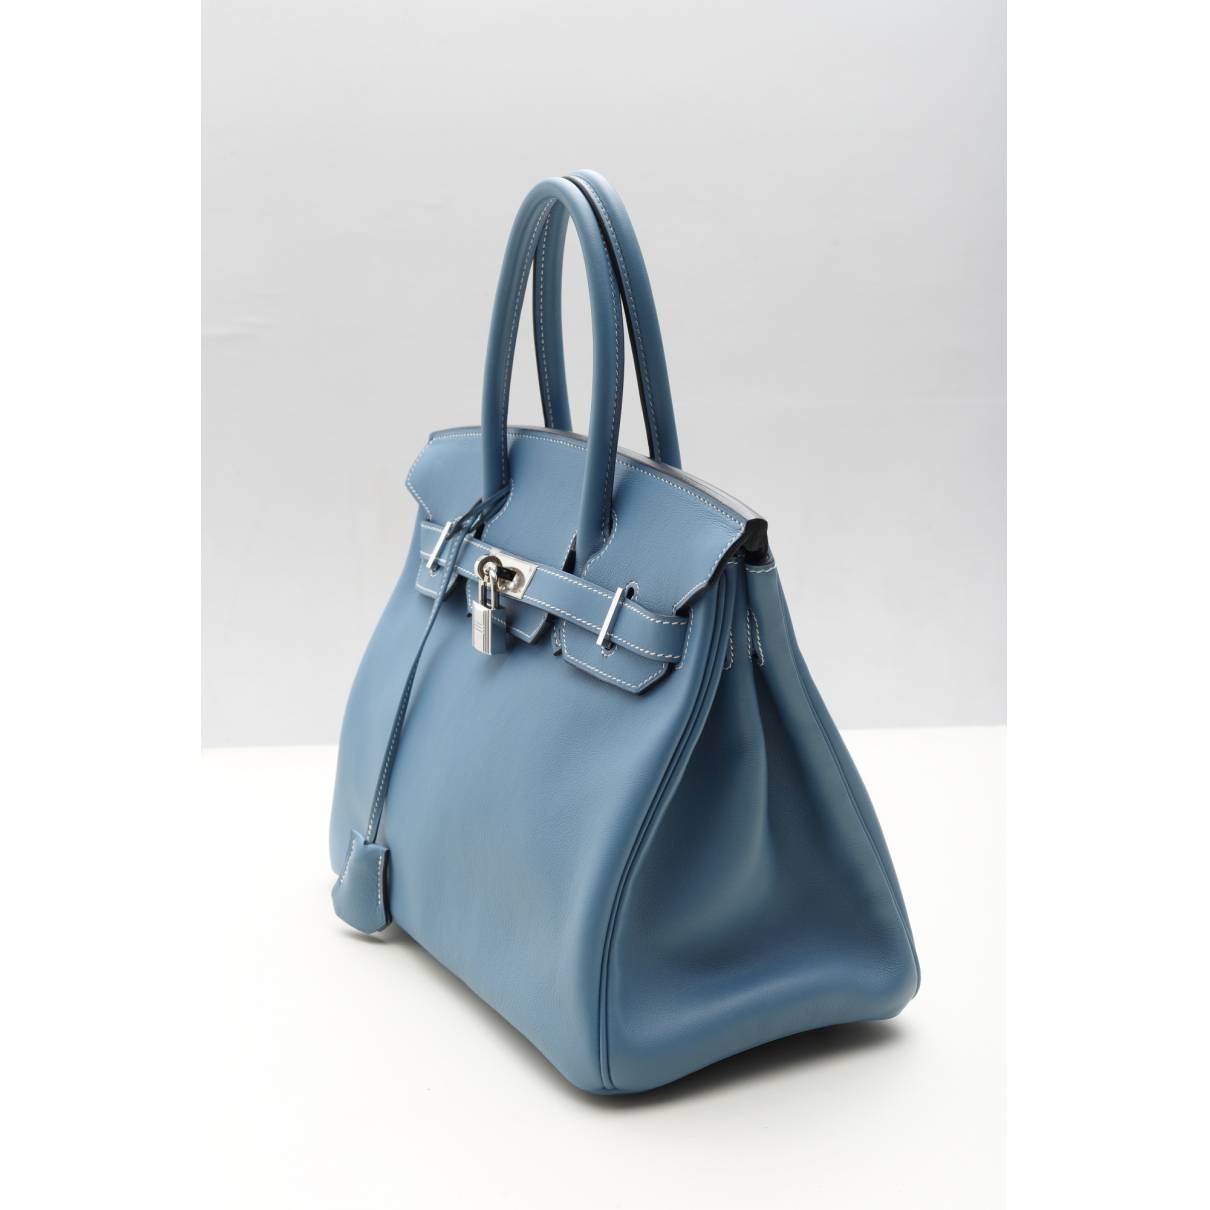 Birkin 30 leather handbag Hermès White in Leather - 38060765